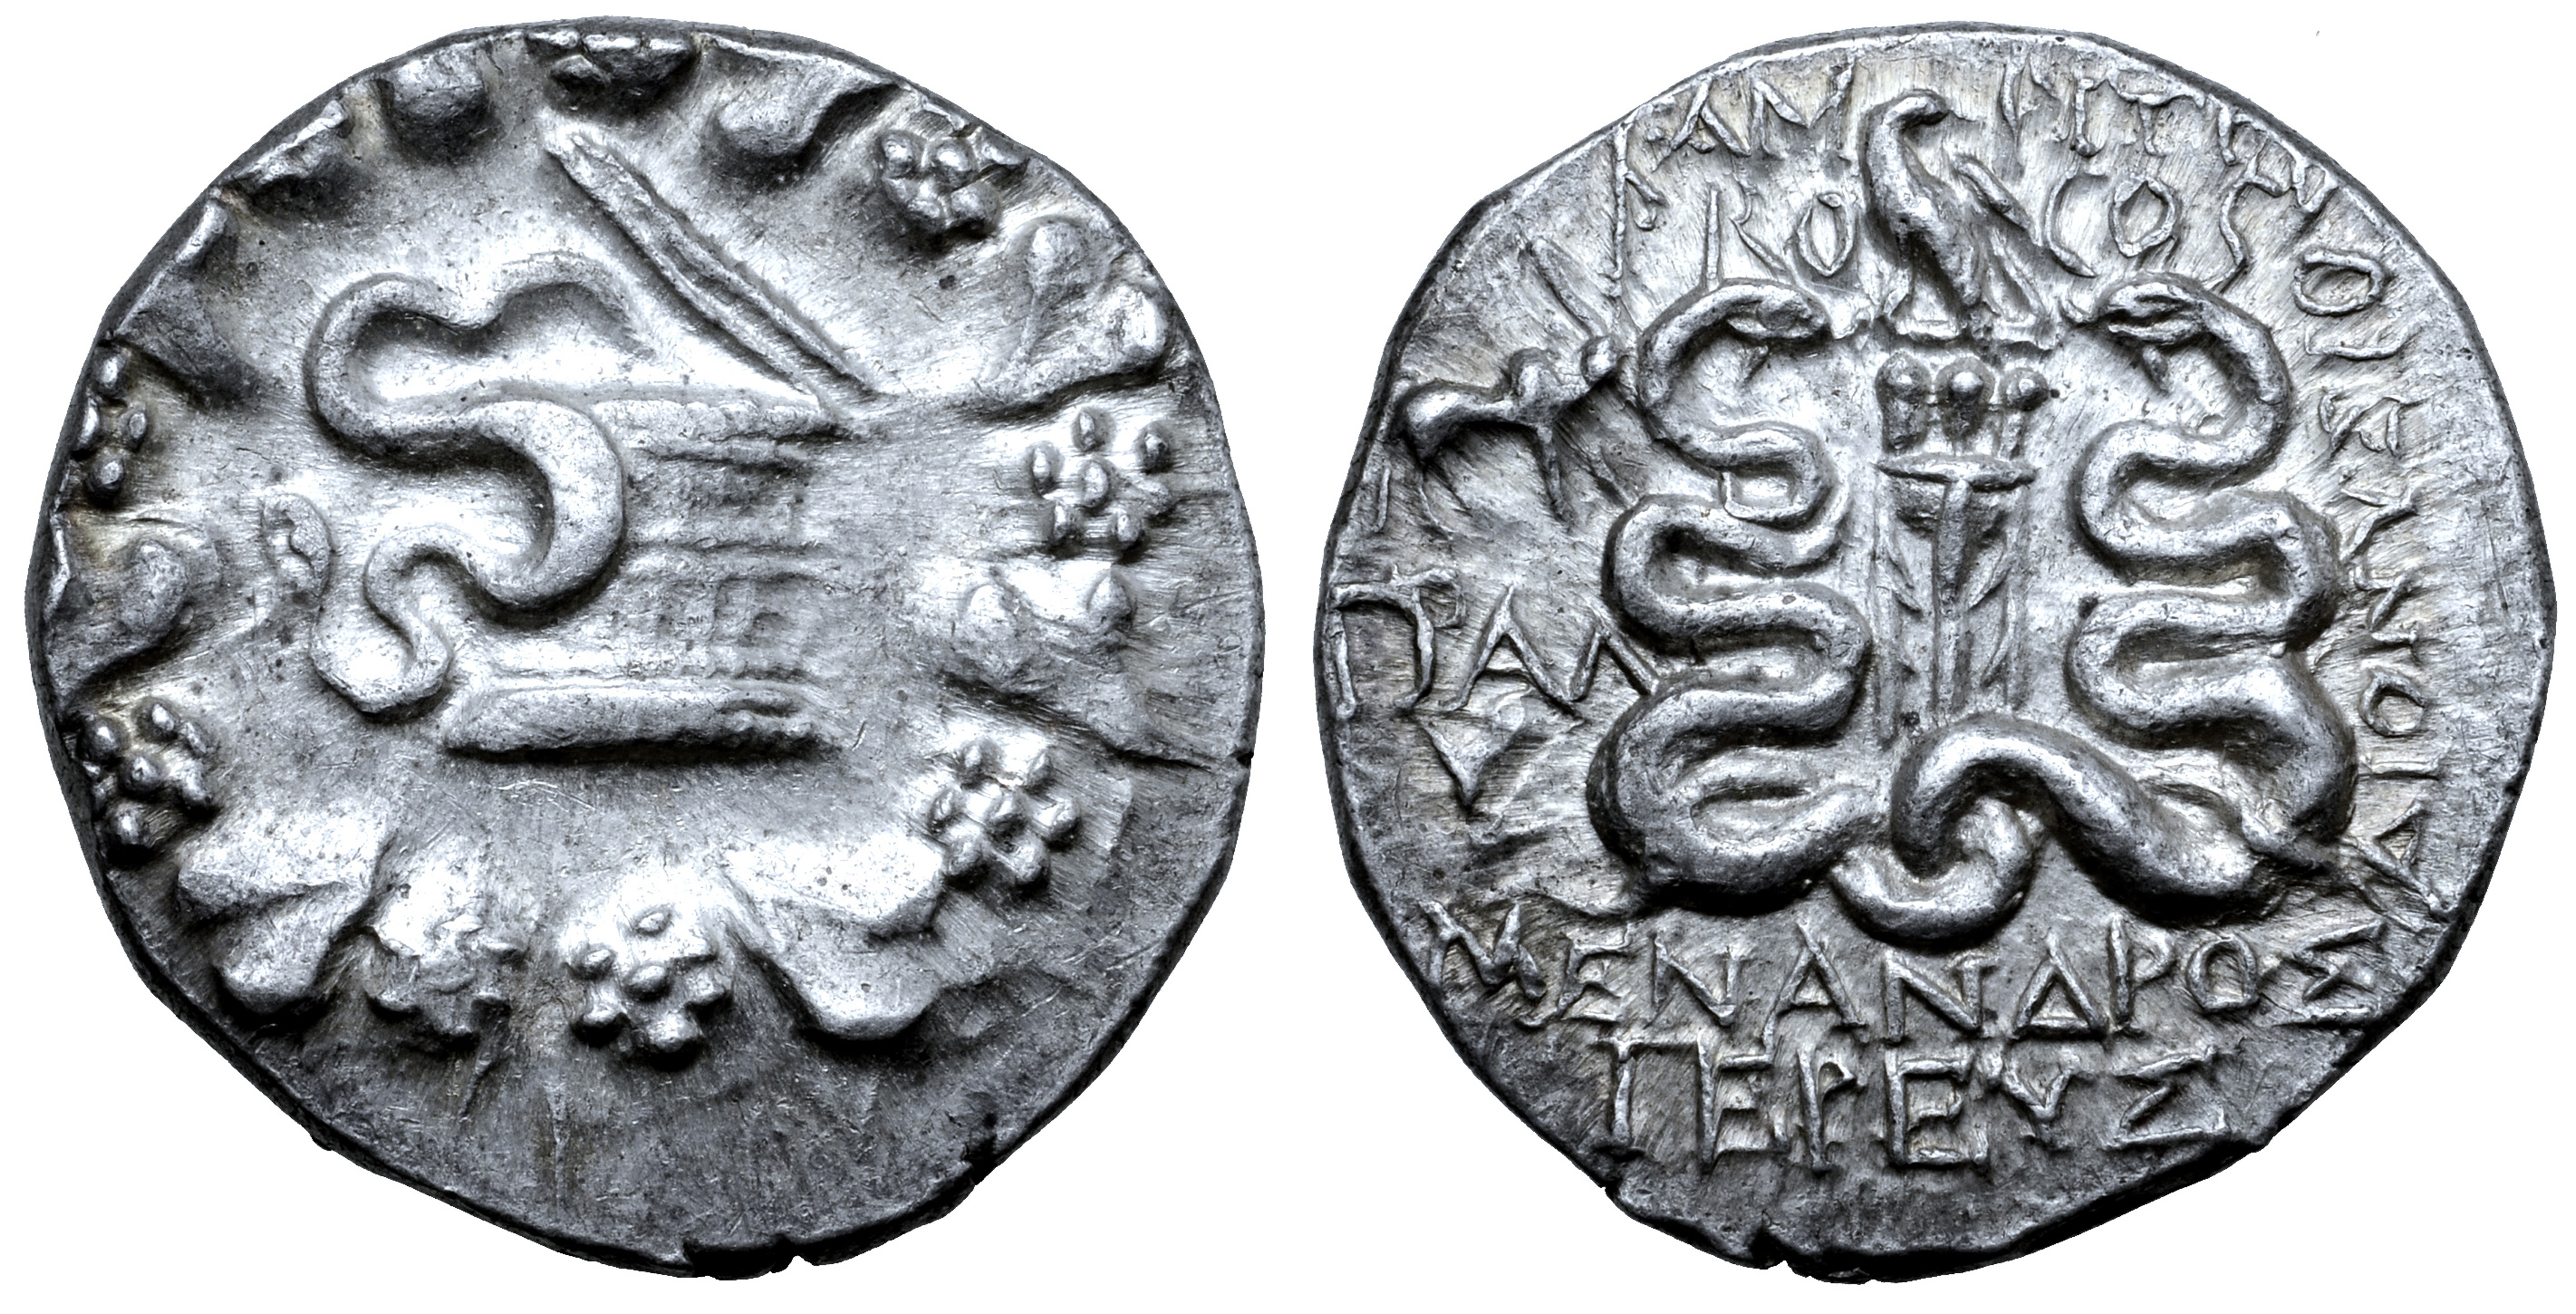 T. Ampius T. f. Balbus AR Cistophoric Tetradrachm of Tralles, Lydia. 58-57 BC. Serpents emerging